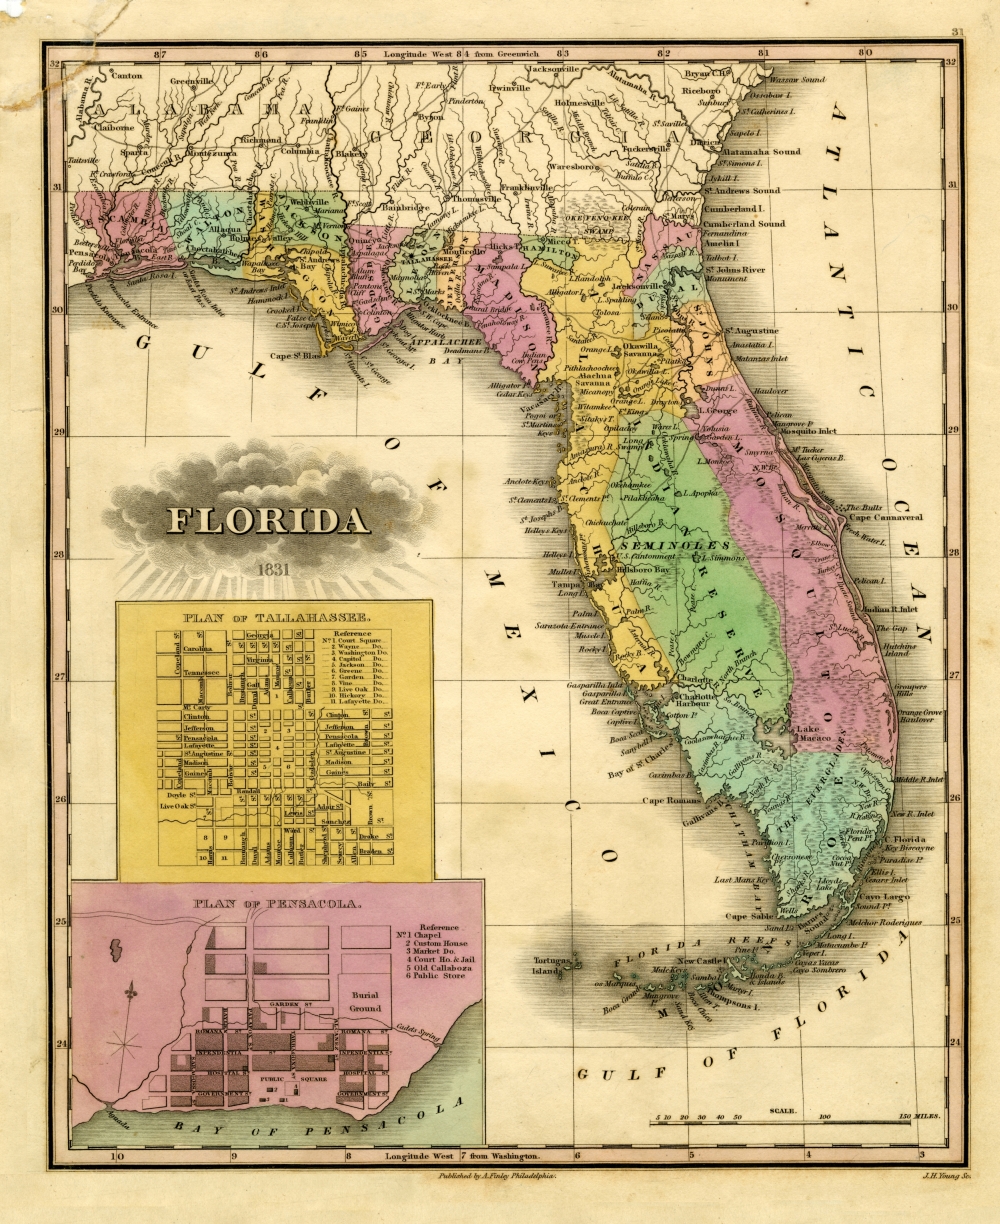 Tanner's Florida, 1831